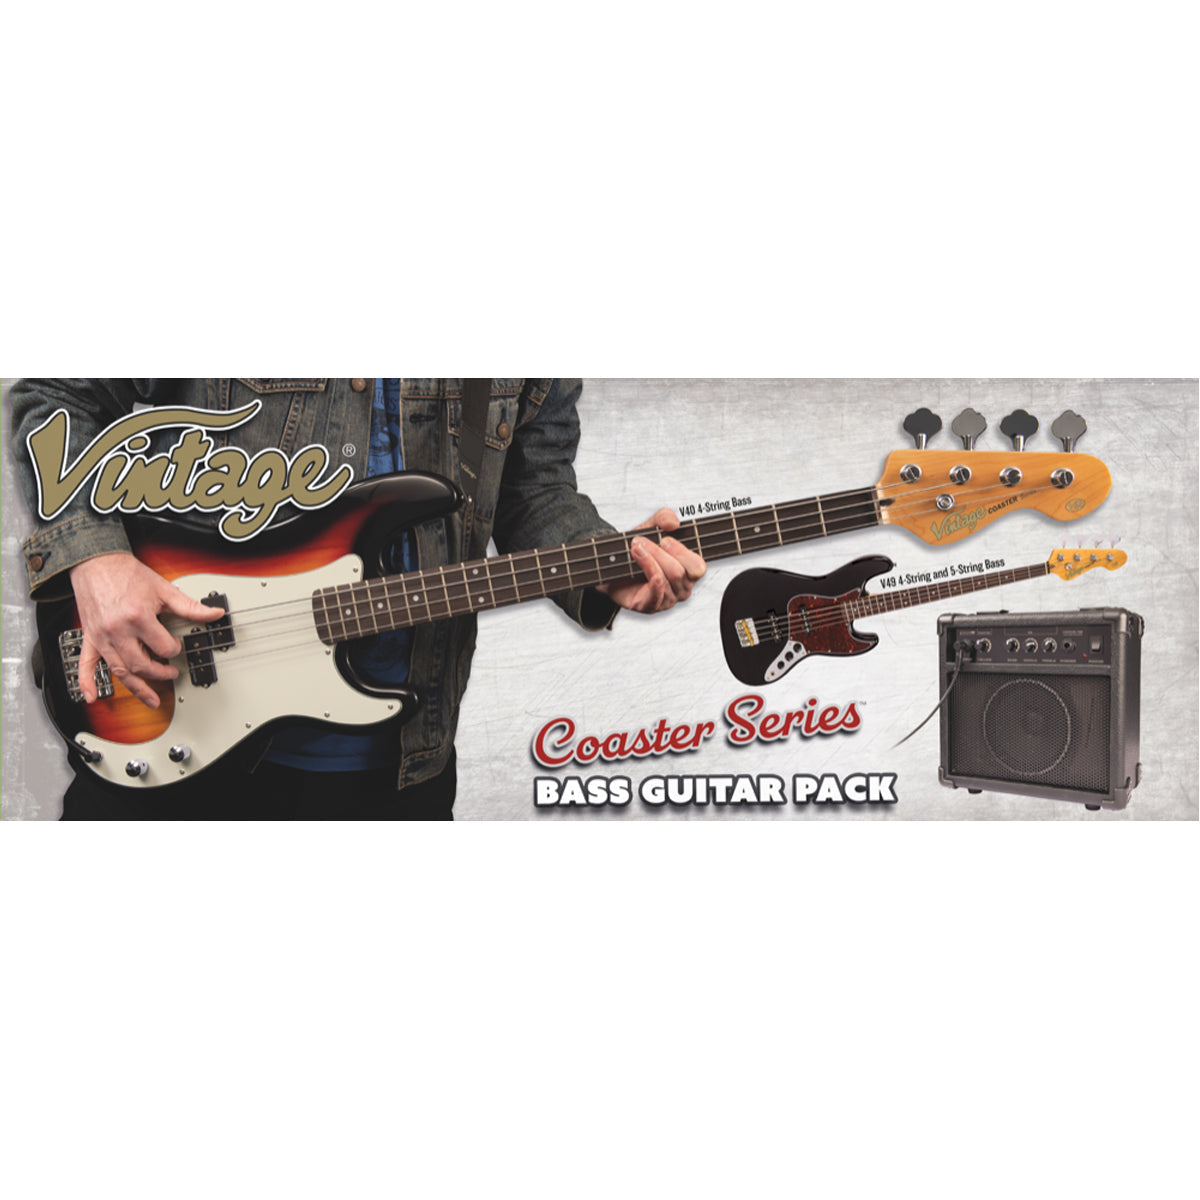 Vintage V40 Coaster Series Bass Guitar Pack ~ Boulevard Black, Bass Guitar Packs for sale at Richards Guitars.